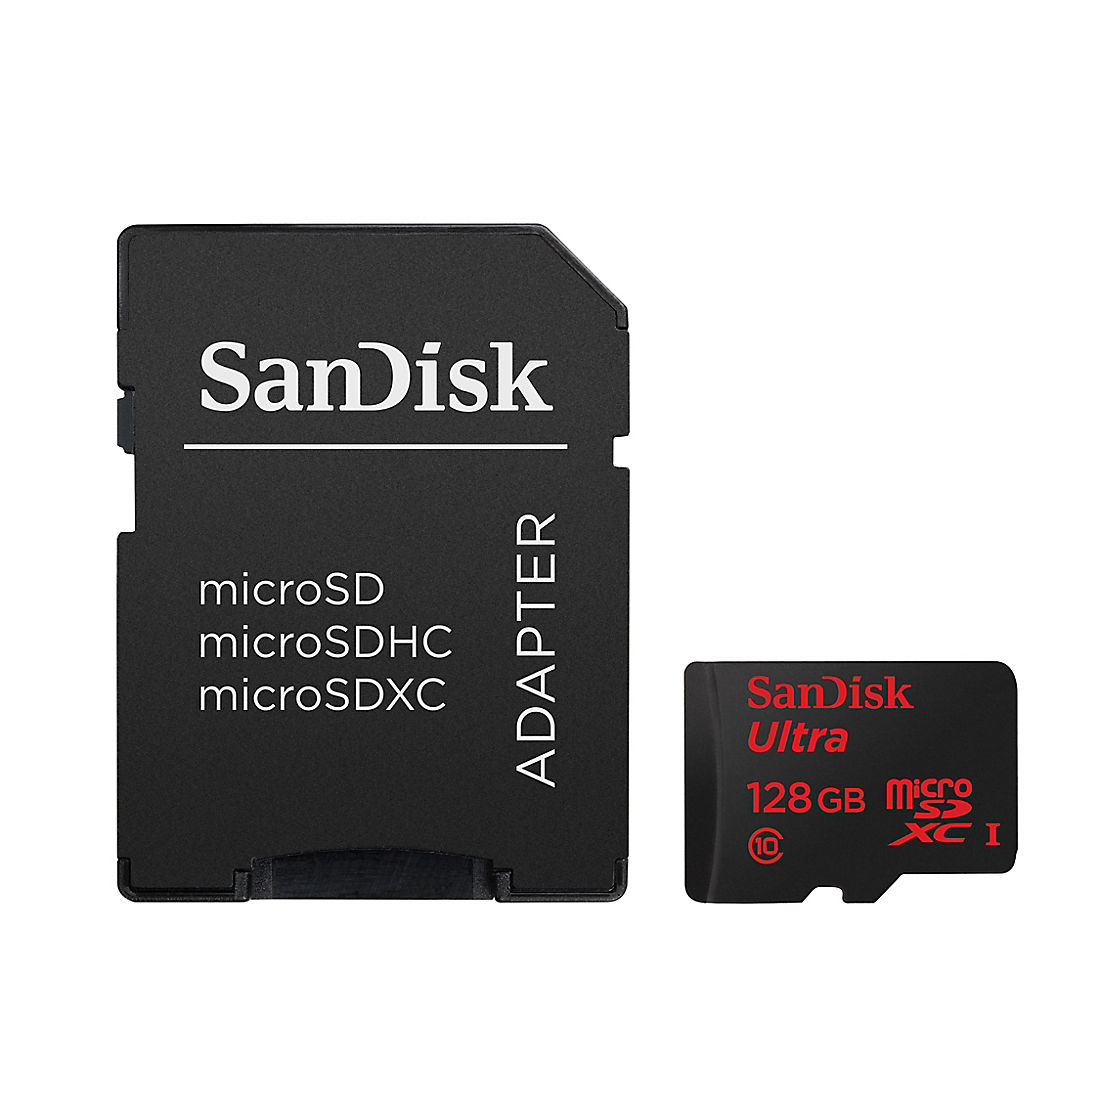 SanDisk Ultra 128GB microSDHC and microSDXC UHS-I Card - BJs Wholesale Club